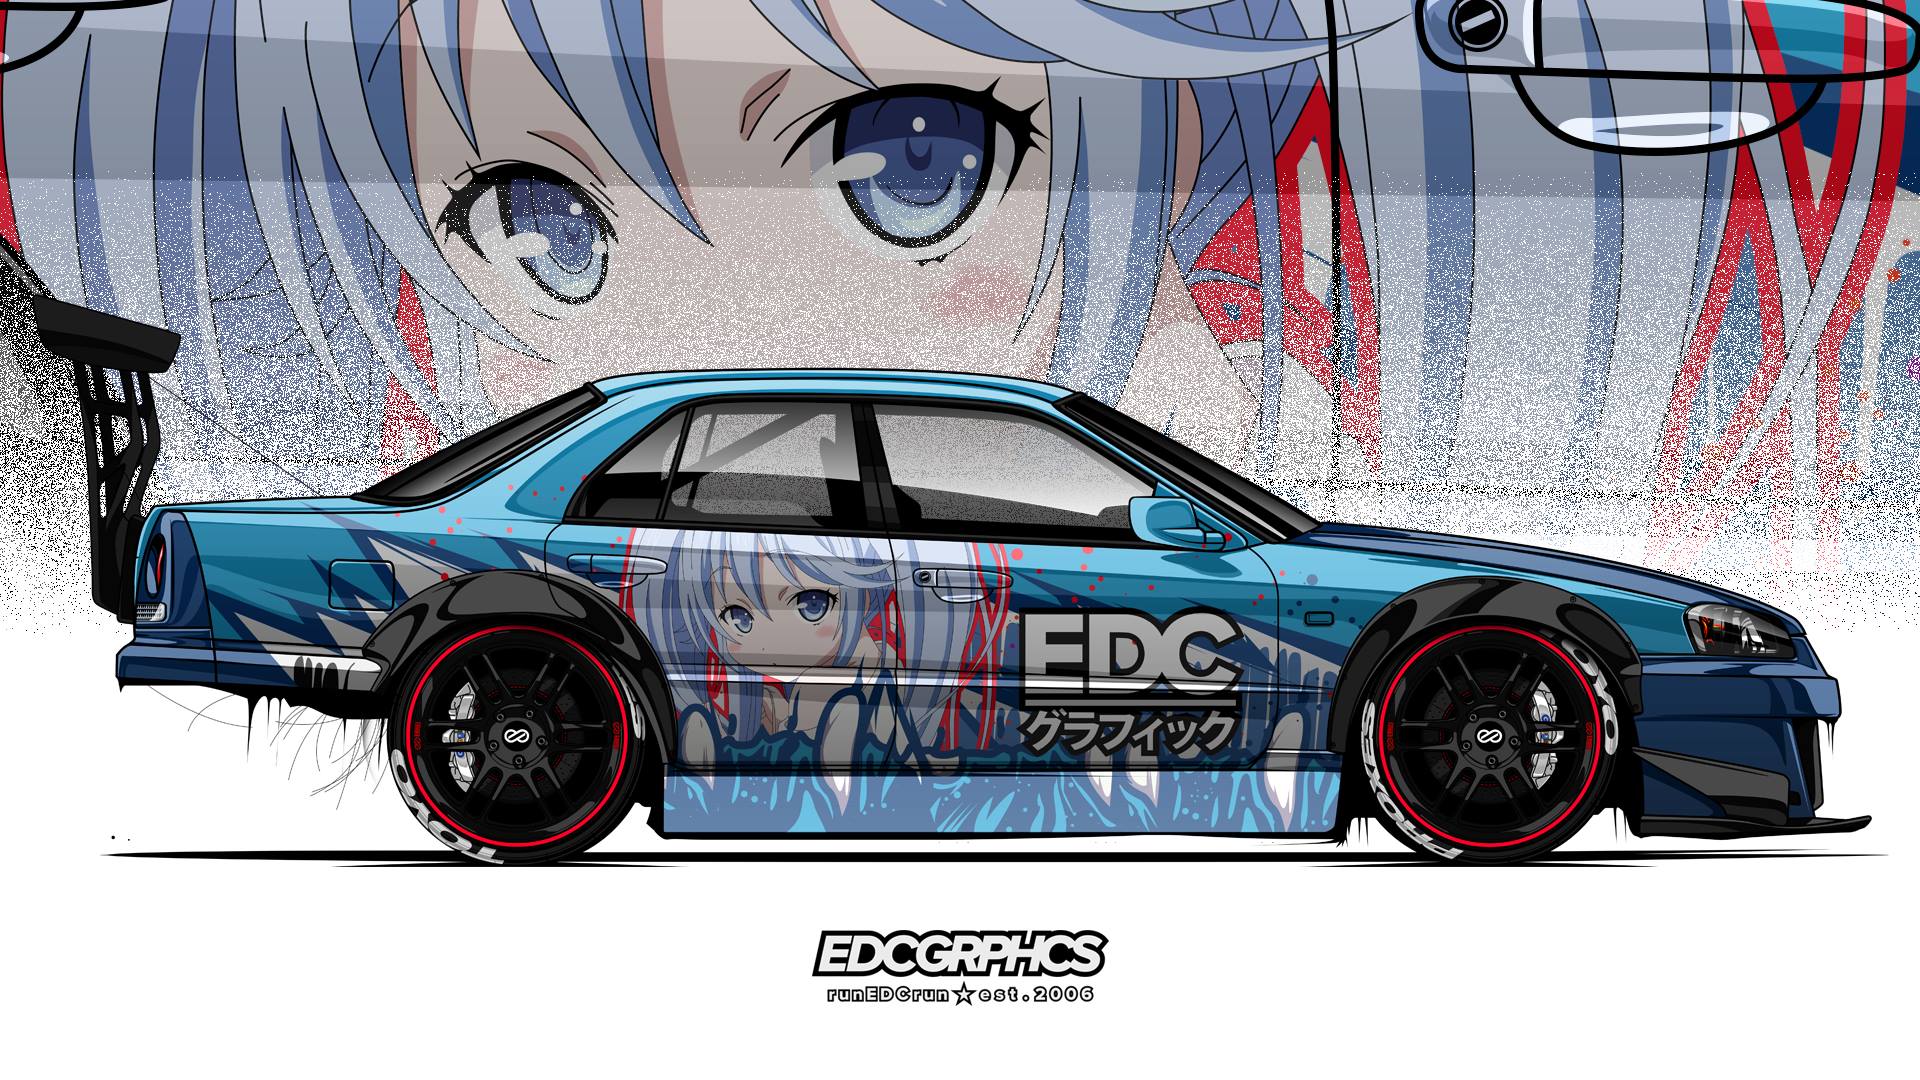 EDC Graphics Nissan Skyline ER34 Render Nissan Japanese Cars Anime Girls JDM Side View 1920x1080